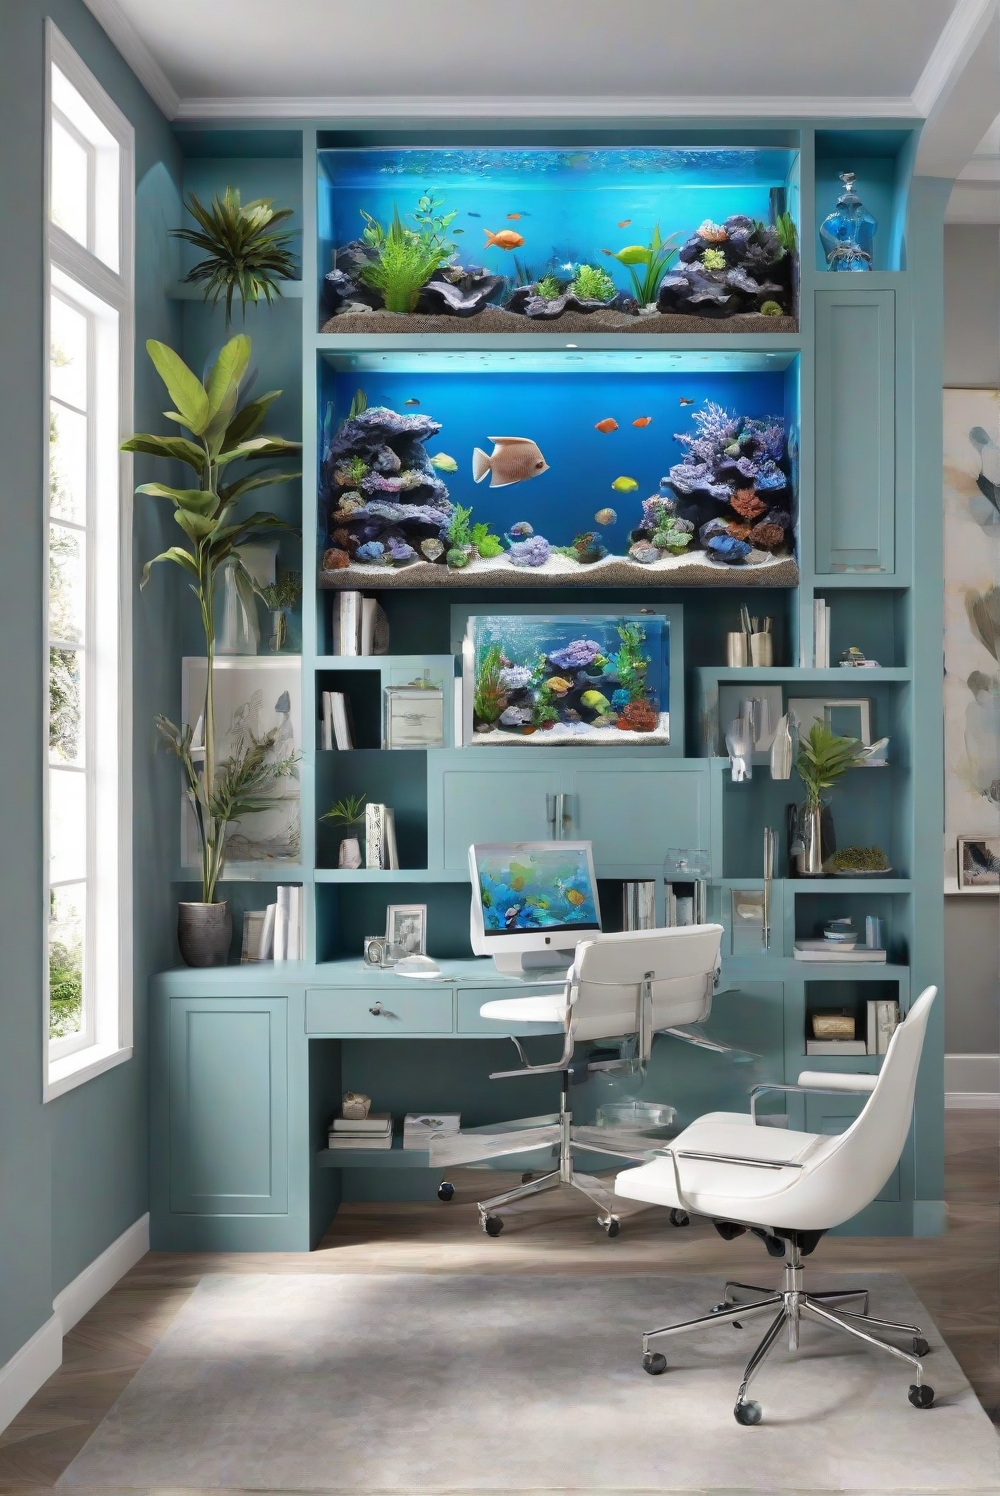 aquarium decoration, underwater theme decor, creative paint ideas, ocean inspired design, marine themed rooms, tropical paradise interior, coastal style home decor